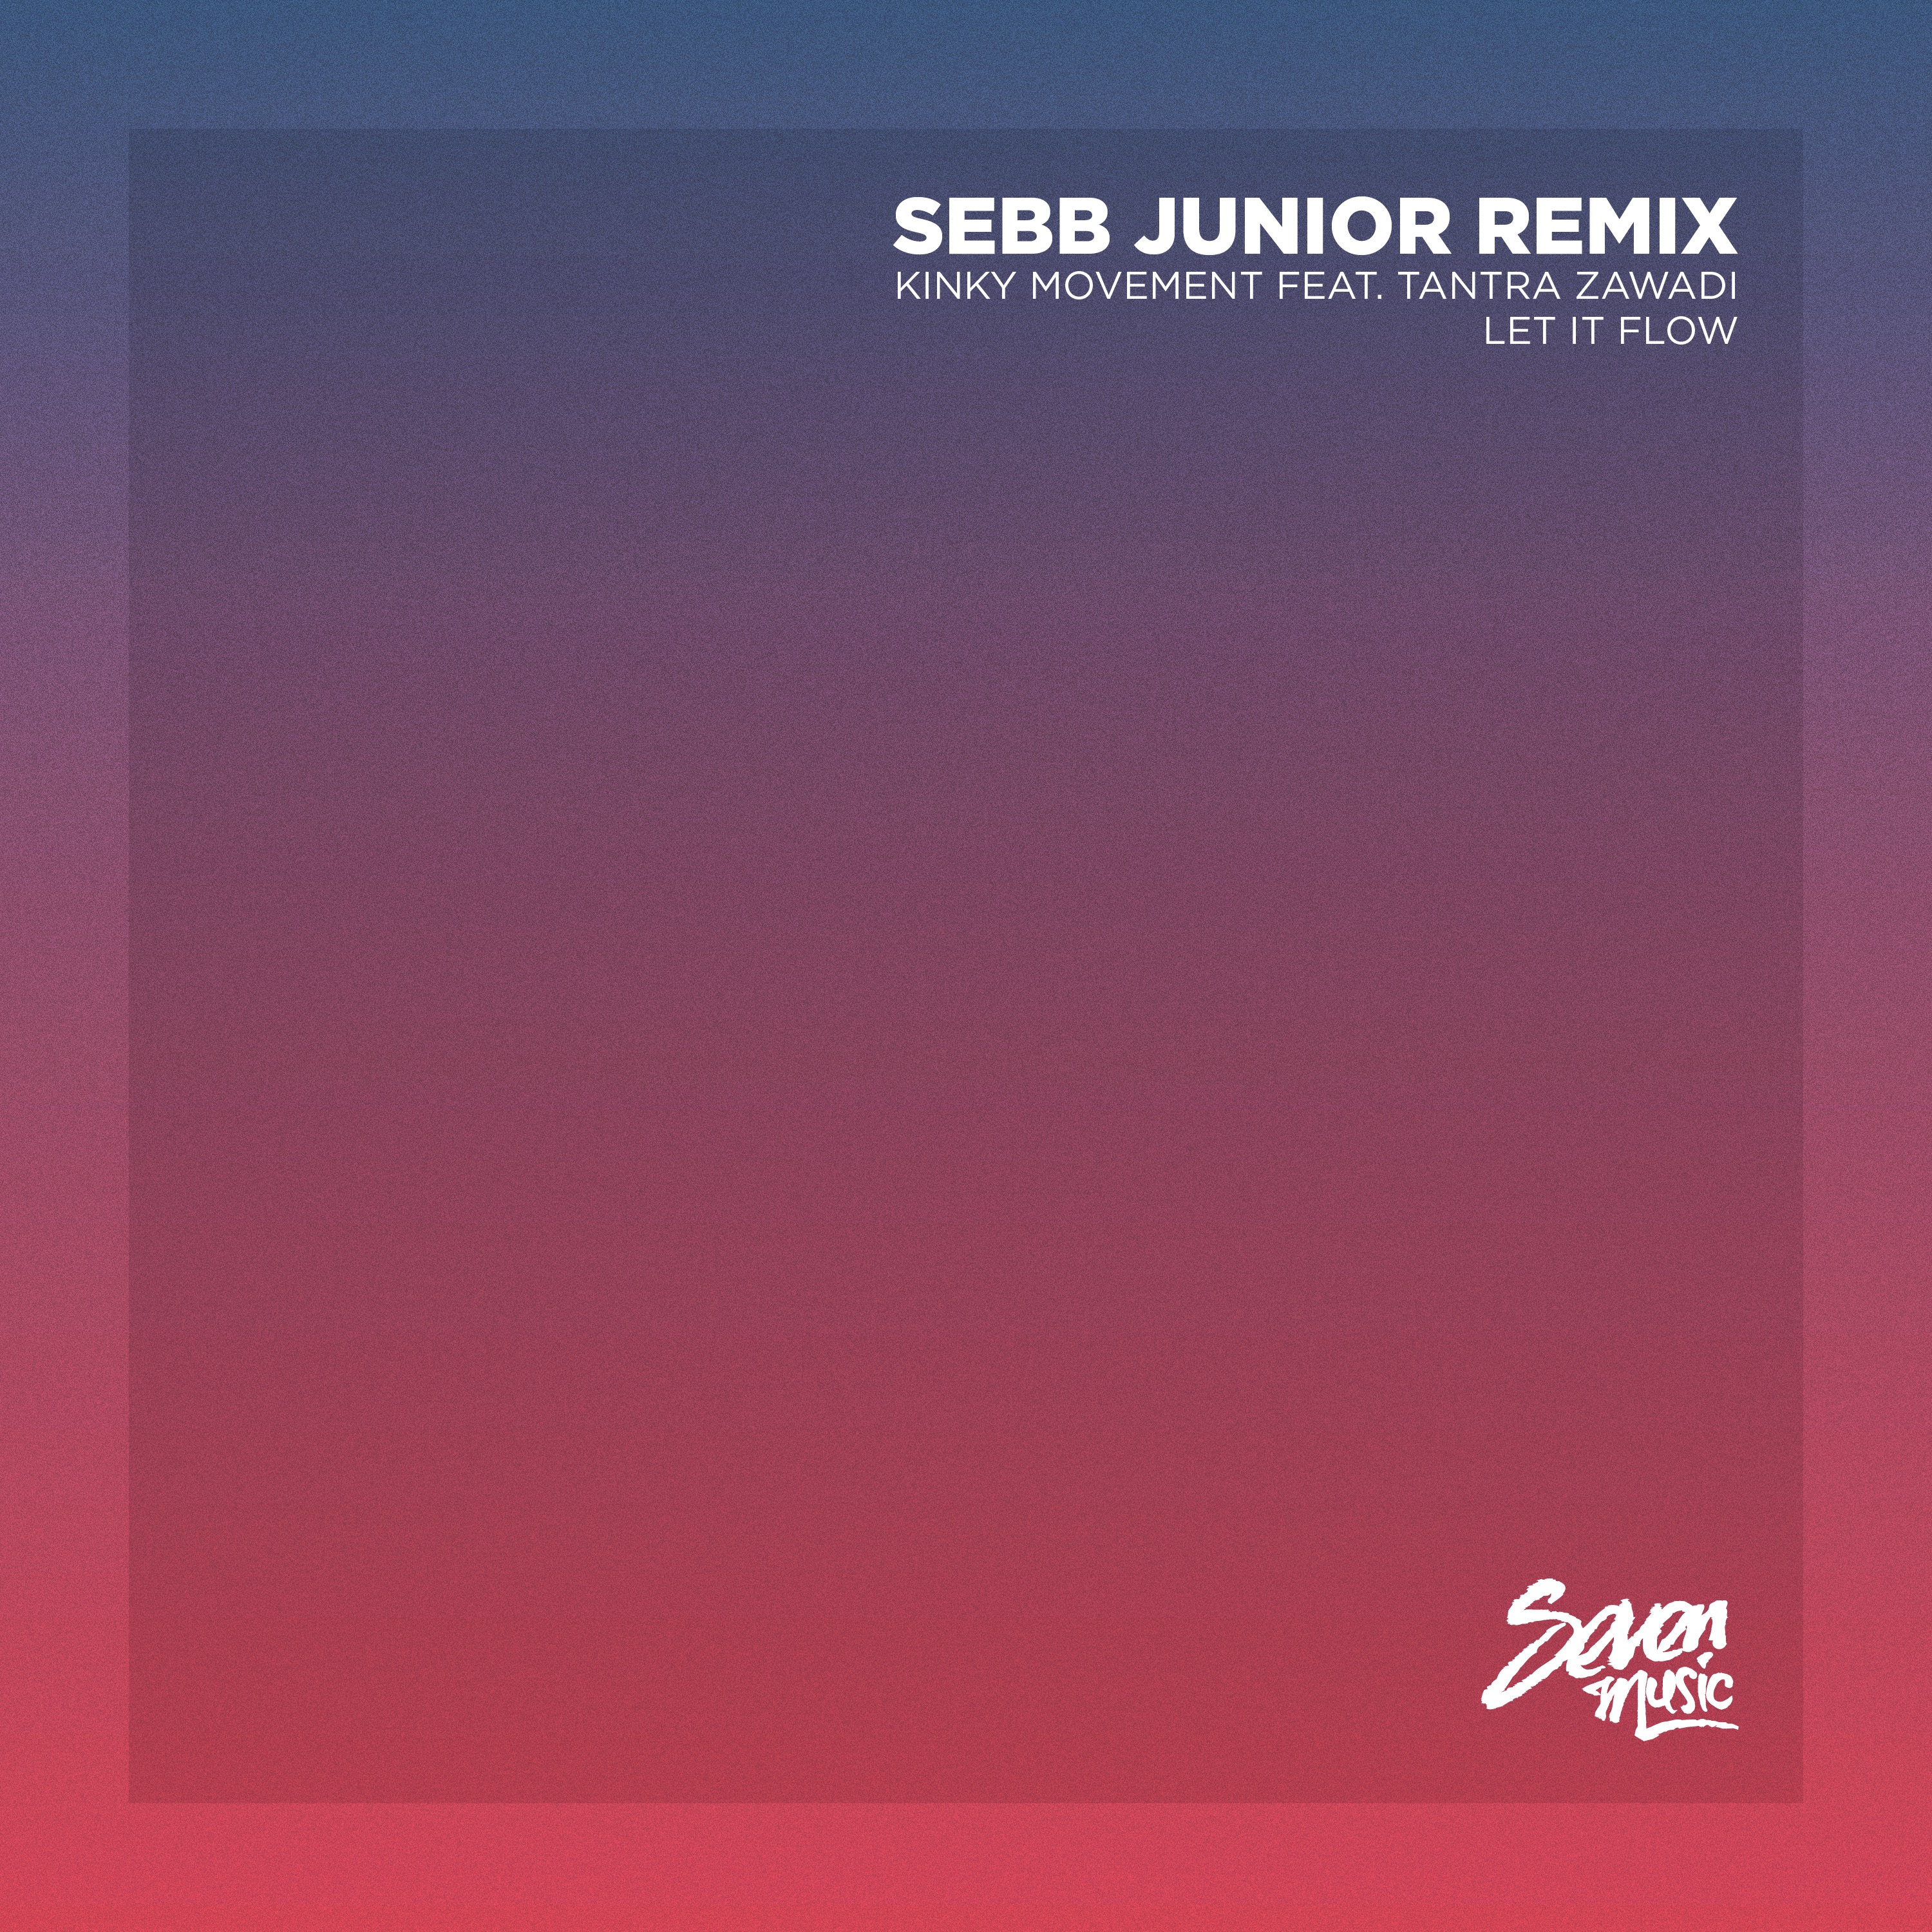 Budata Premiere: Kinky Movement - Let It Flow (Sebb Junior Remix) - Seven Music